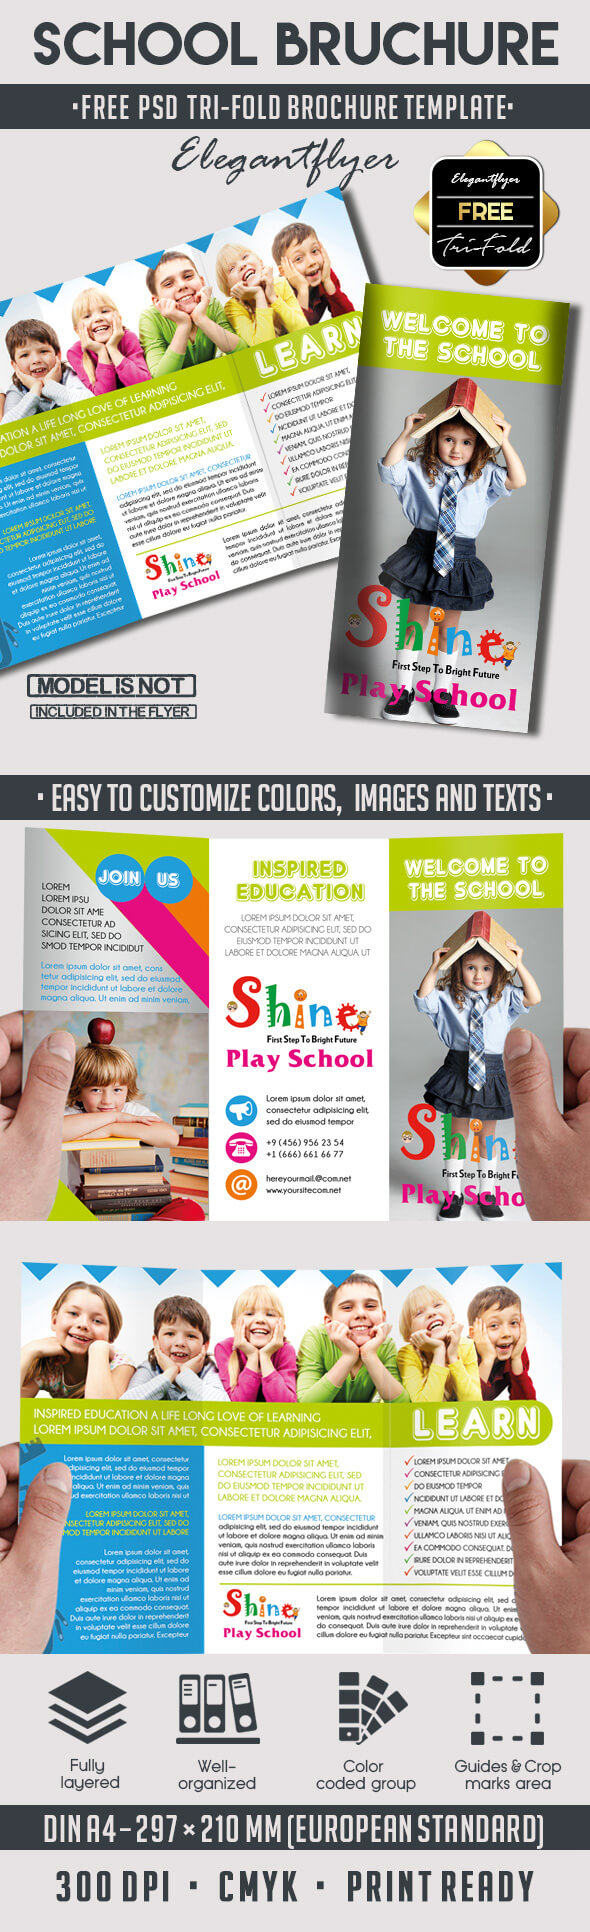 School – Free Psd Tri Fold Psd Brochure Template On Behance With Play School Brochure Templates